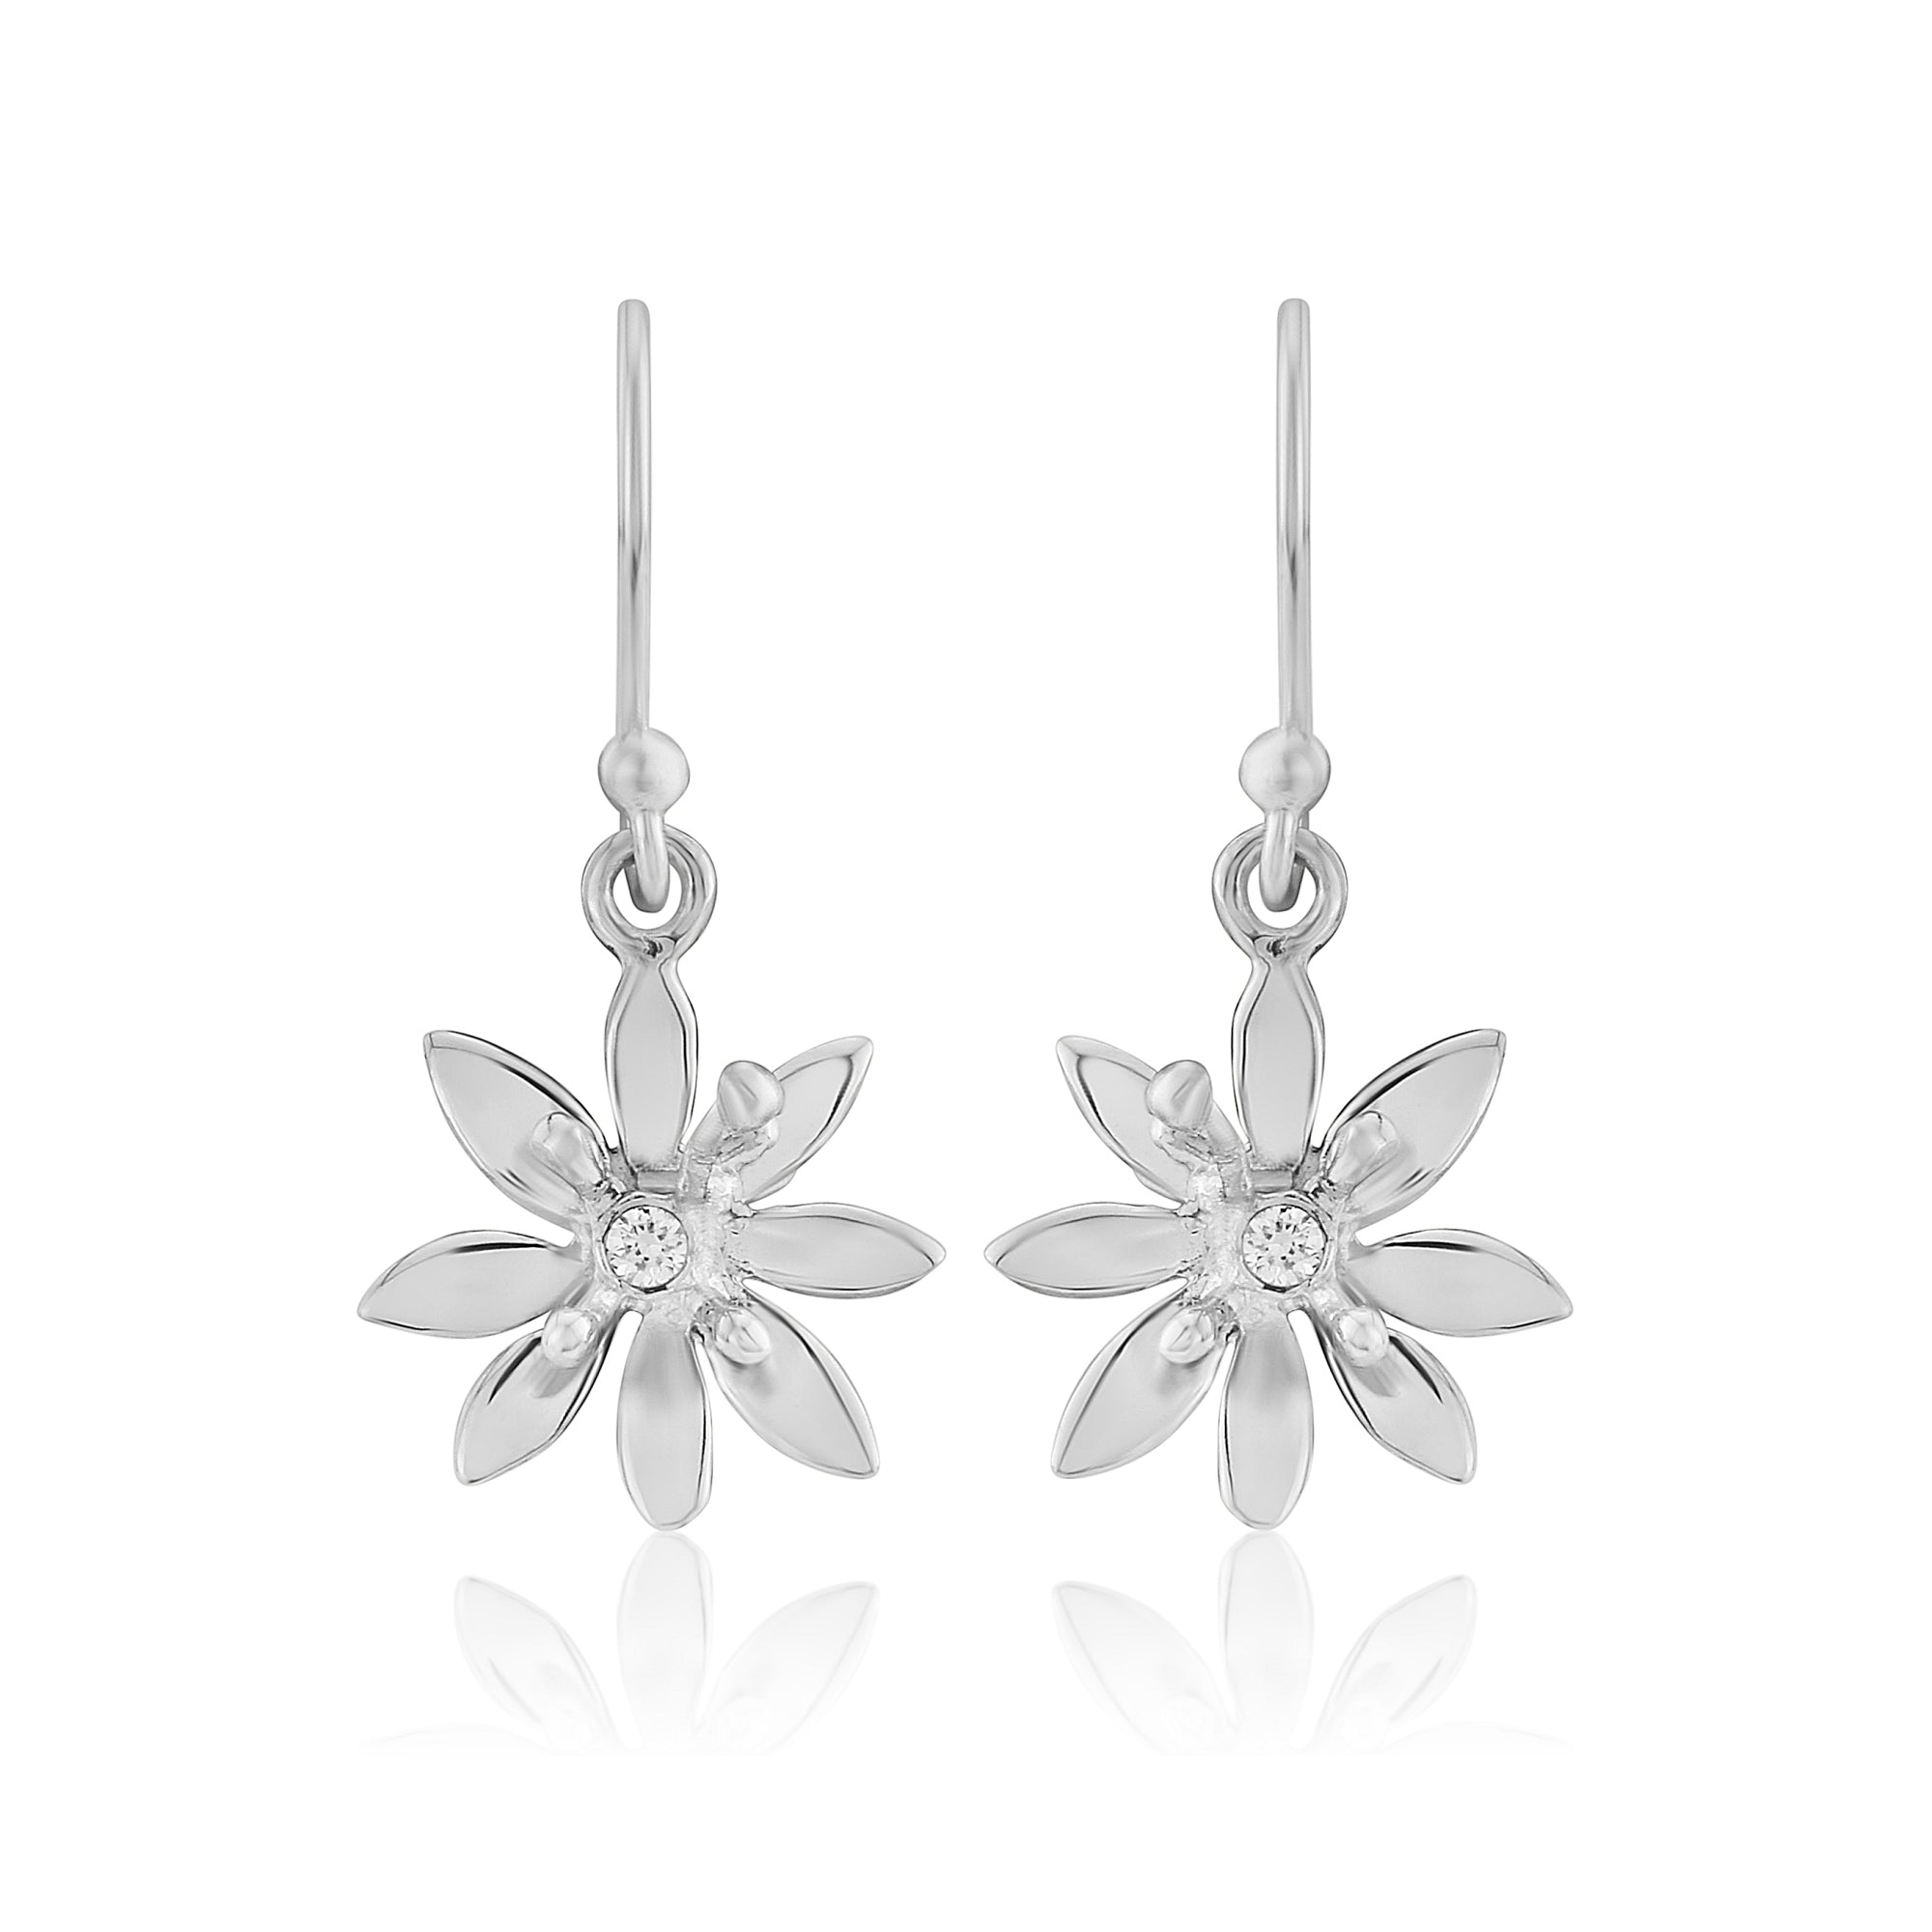 Allium small silver drop earrings| Glenna Jewellery Scotland